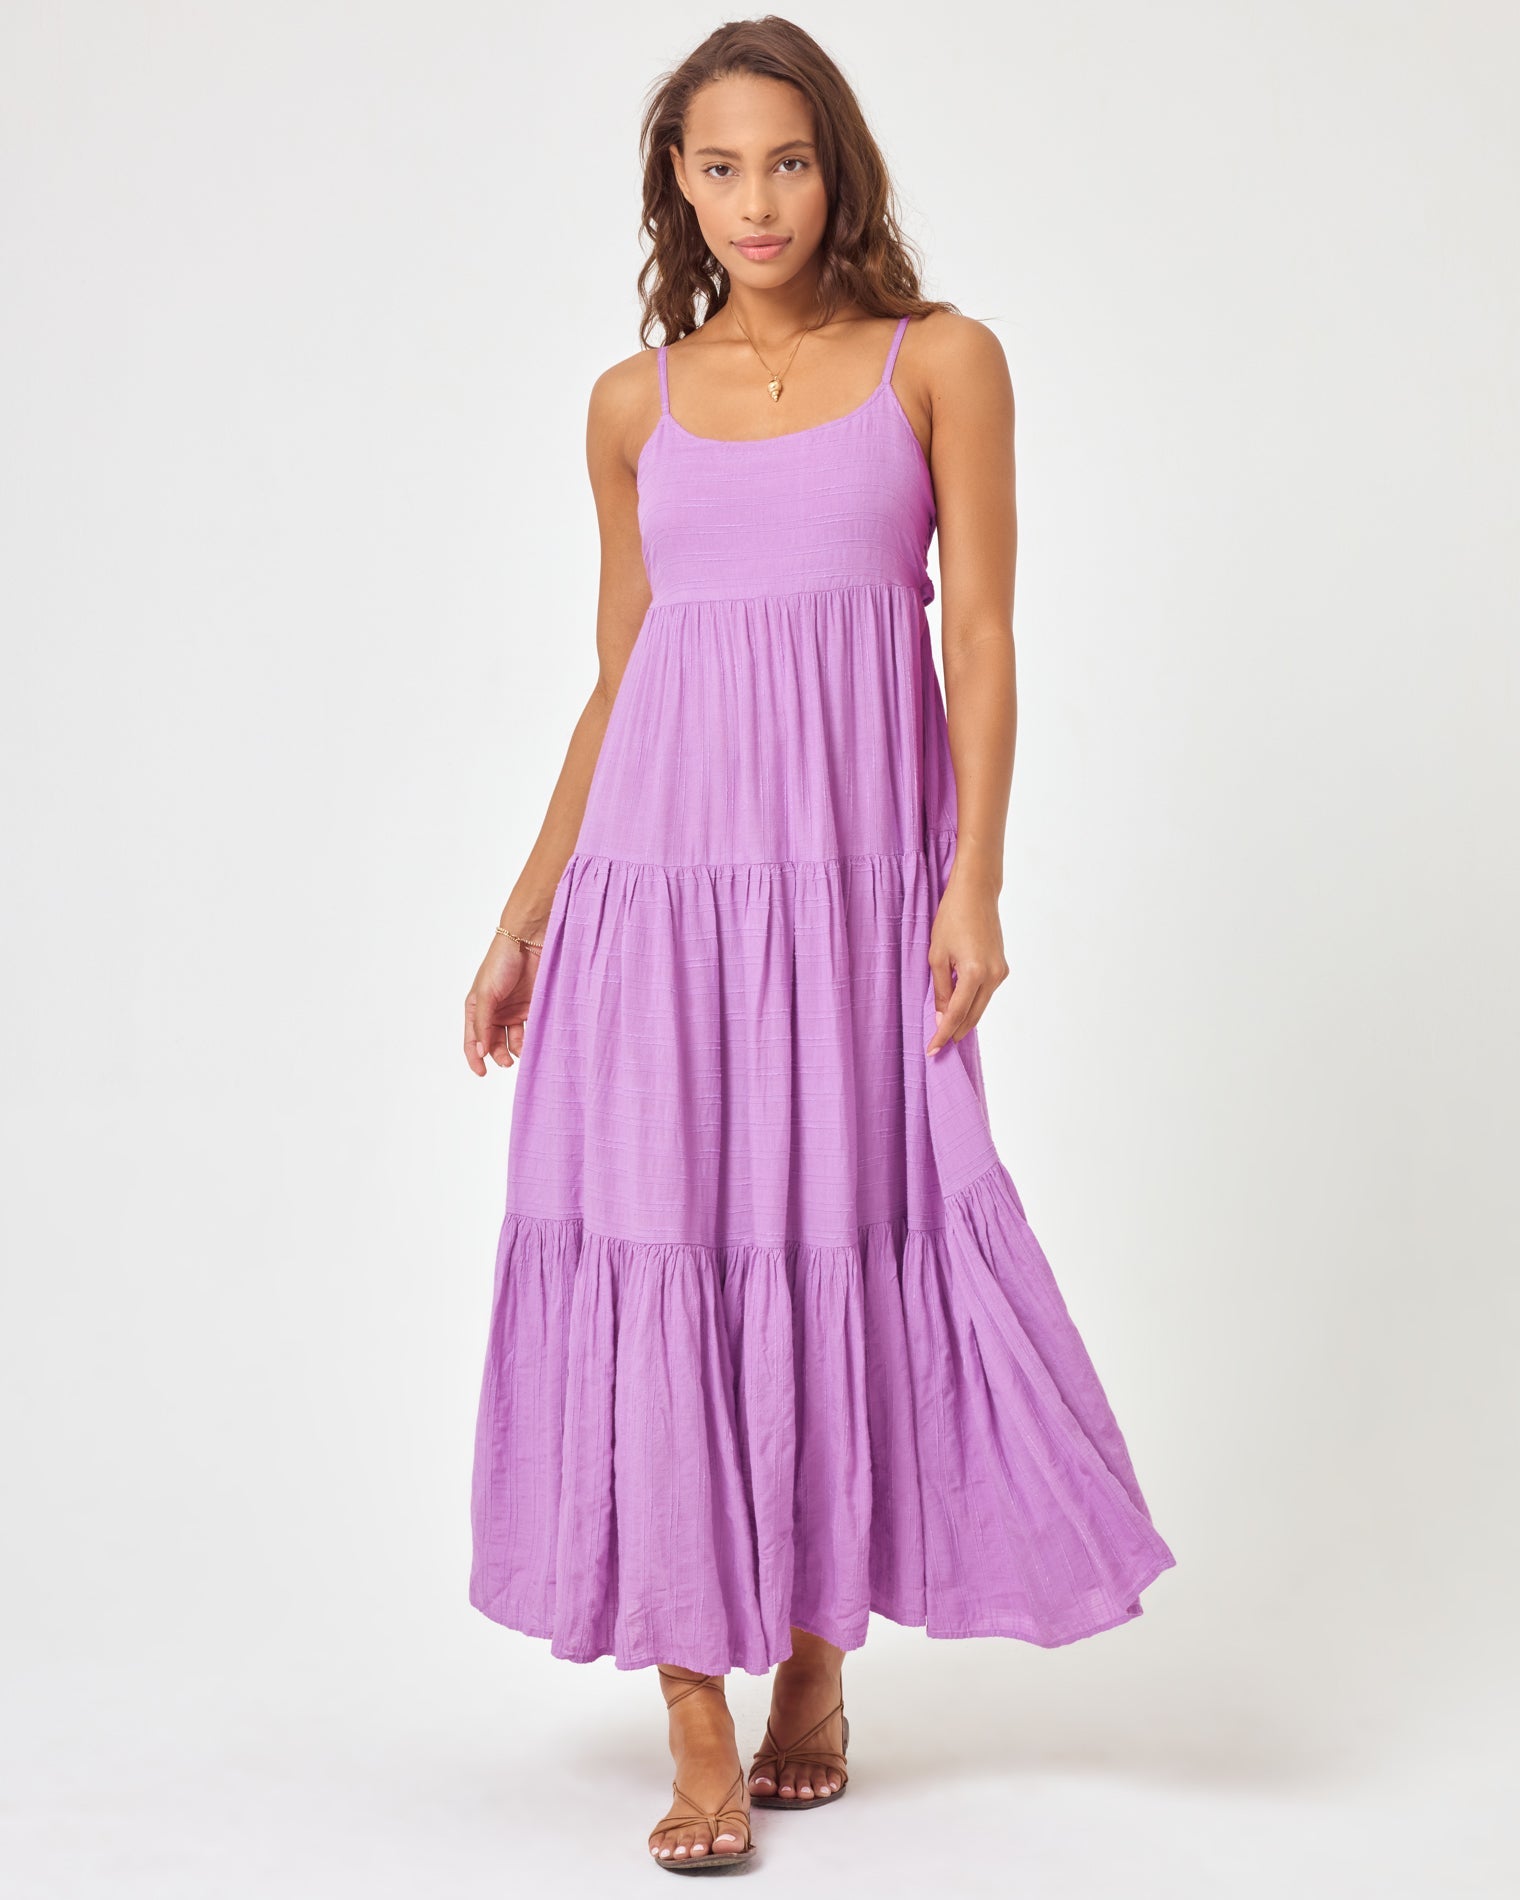 Santorini Dress Jewel | Model: Natalie (size: S) | https://cdn.shopify.com/videos/c/o/v/61ea322aa64049c88fd5fb6ea3b9b7eb.mp4